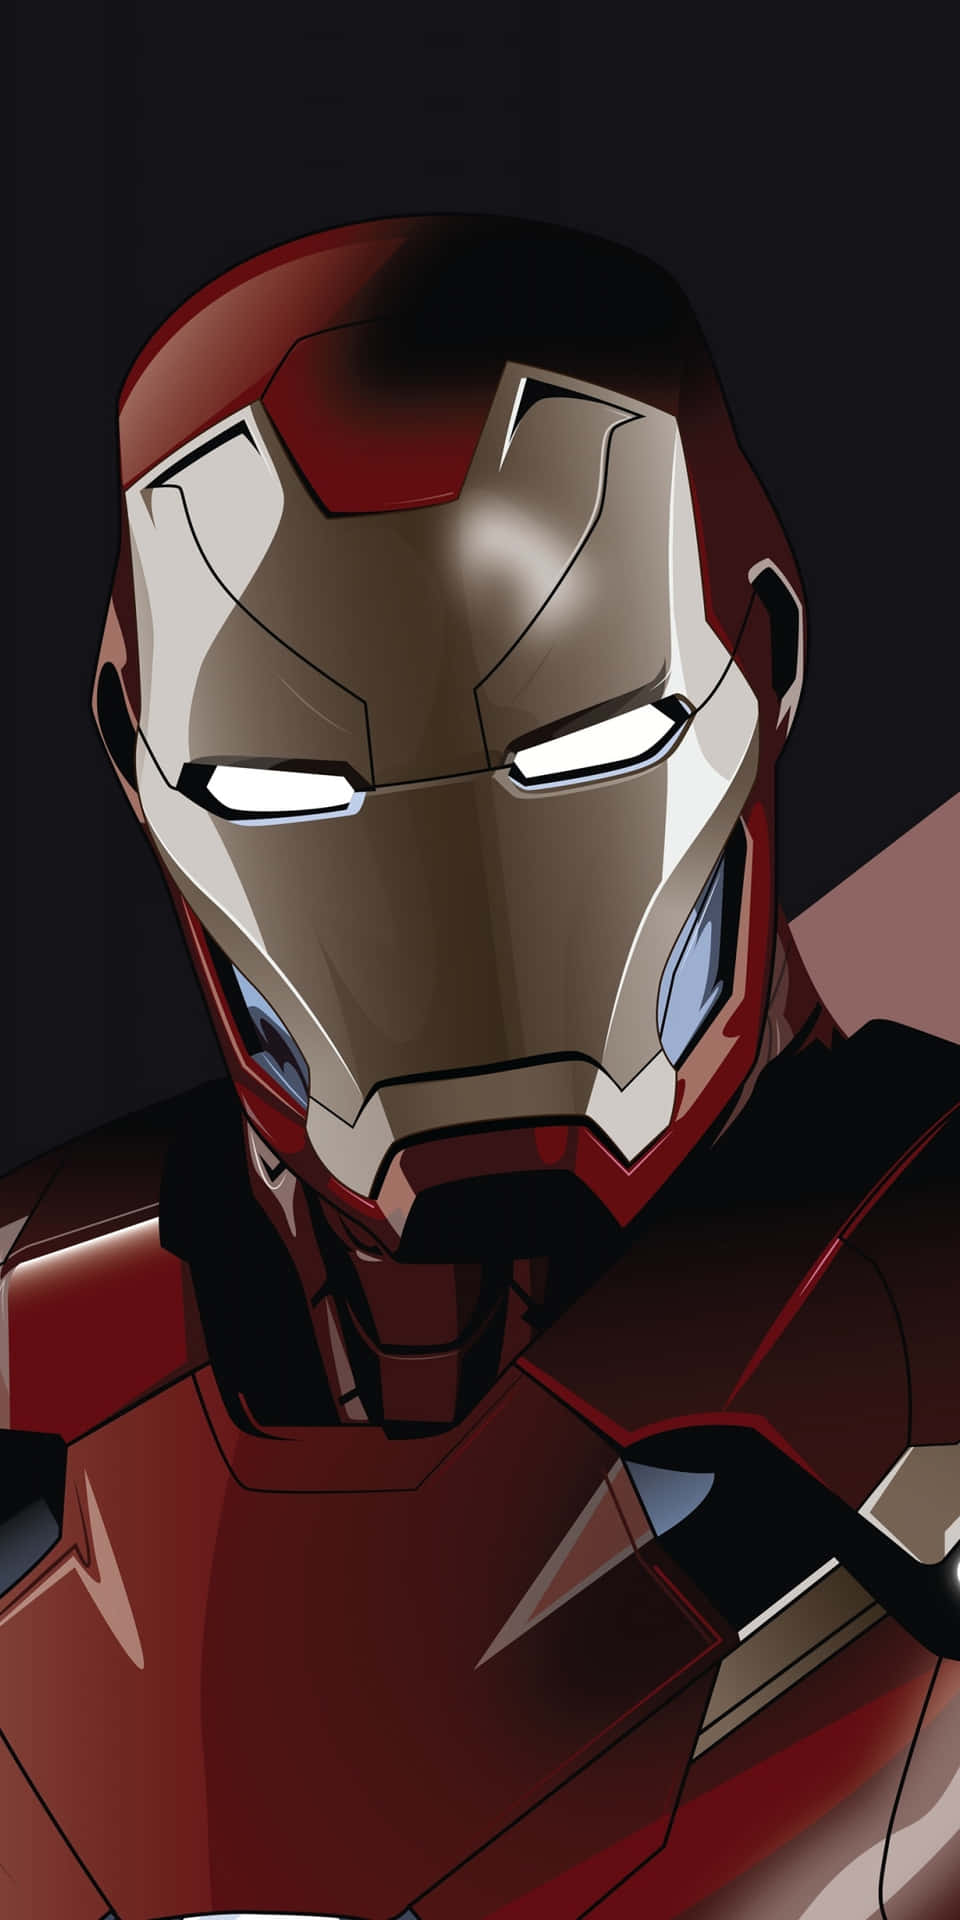 Pixel3 Iron Man Poster Bakgrundsbild.